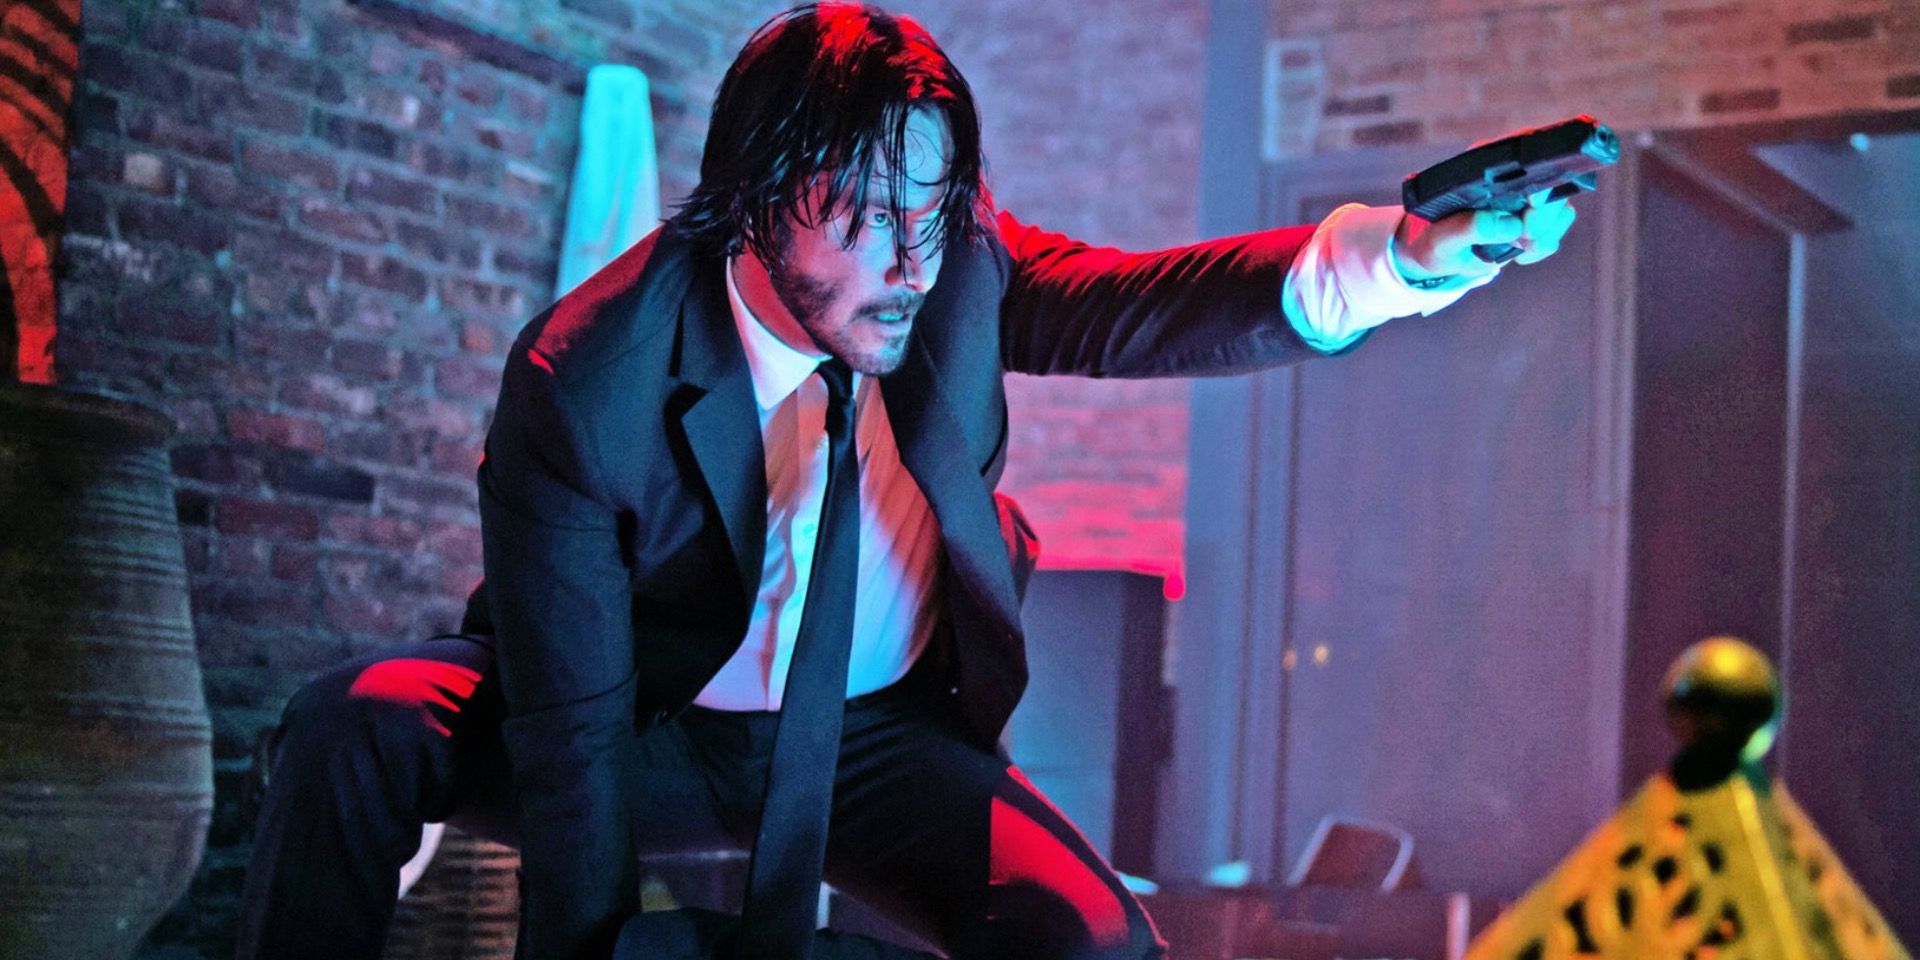 Keanu Reeves as John Wick in the Red Circle nightclub